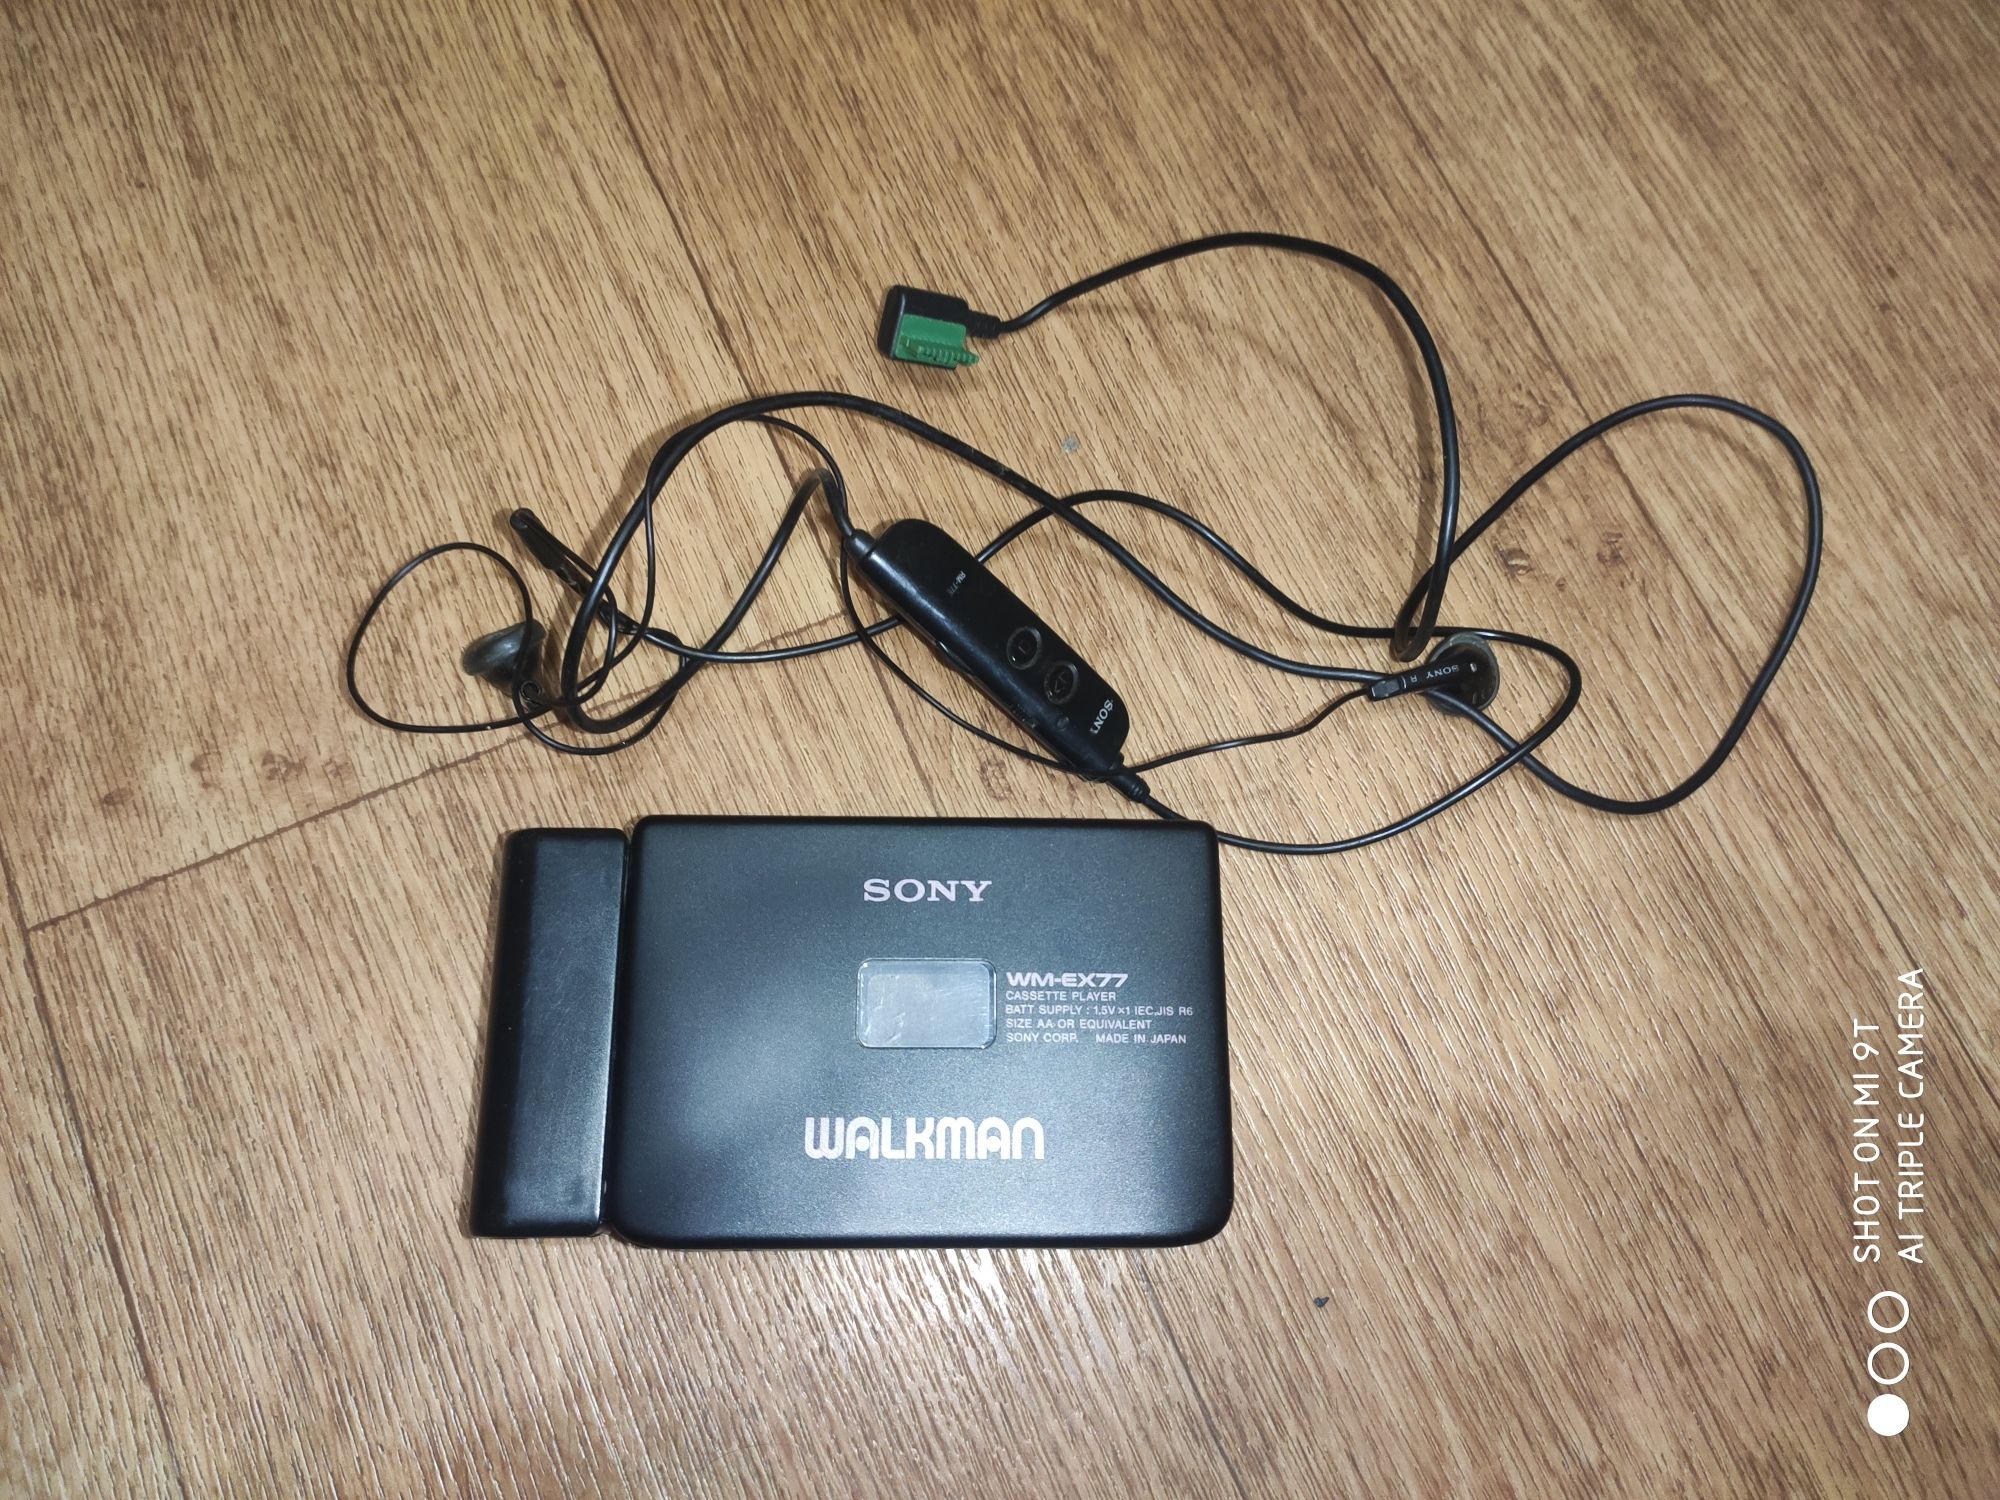 Sony Walkman wm-fx77 аудиоплеер